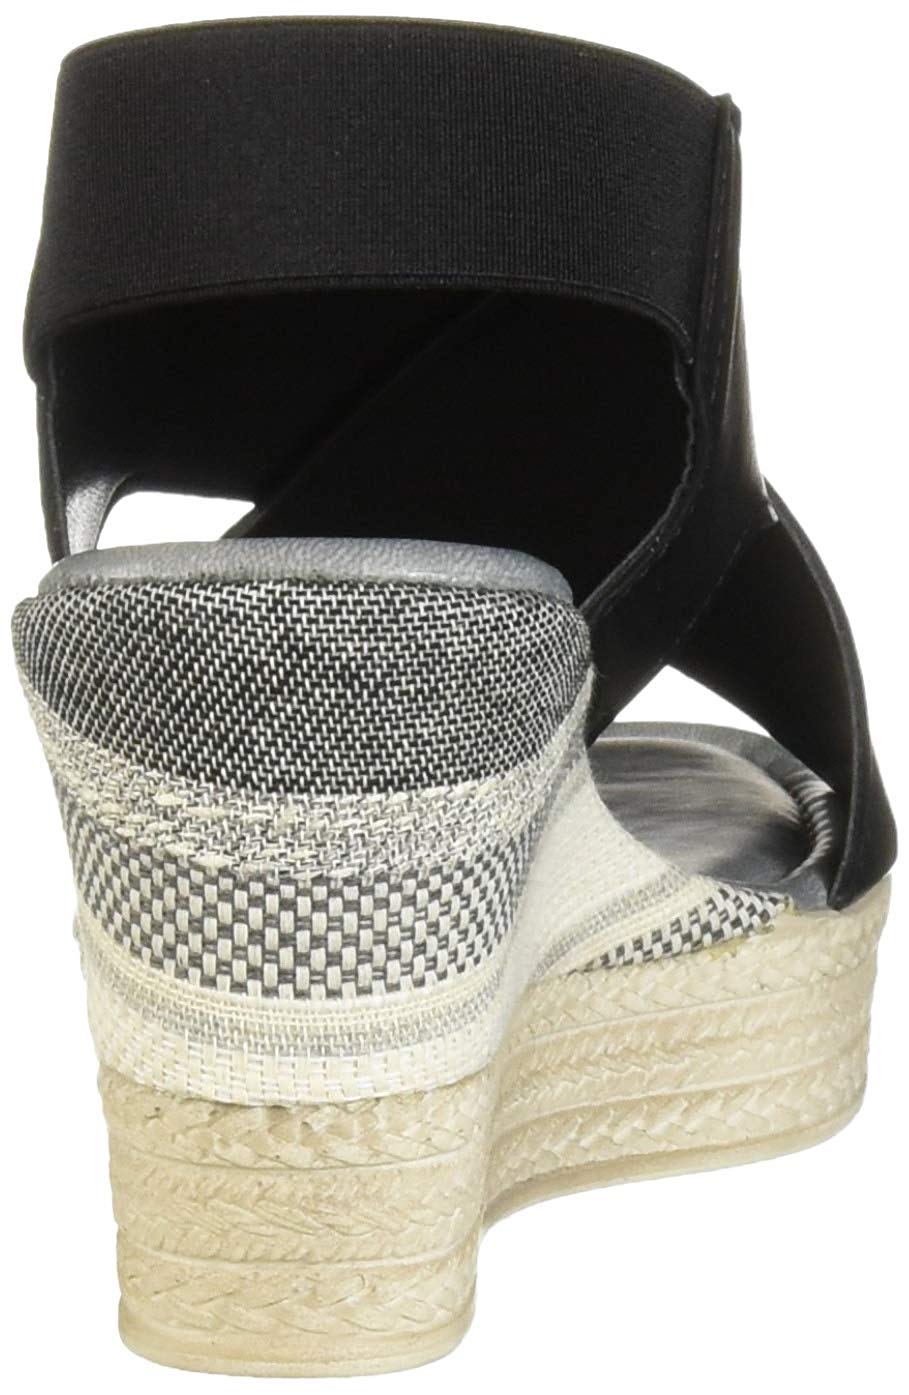 Womens Rox Open Toe Casual Espadrille Sandals, Black, Size 9.5 S2wI | eBay